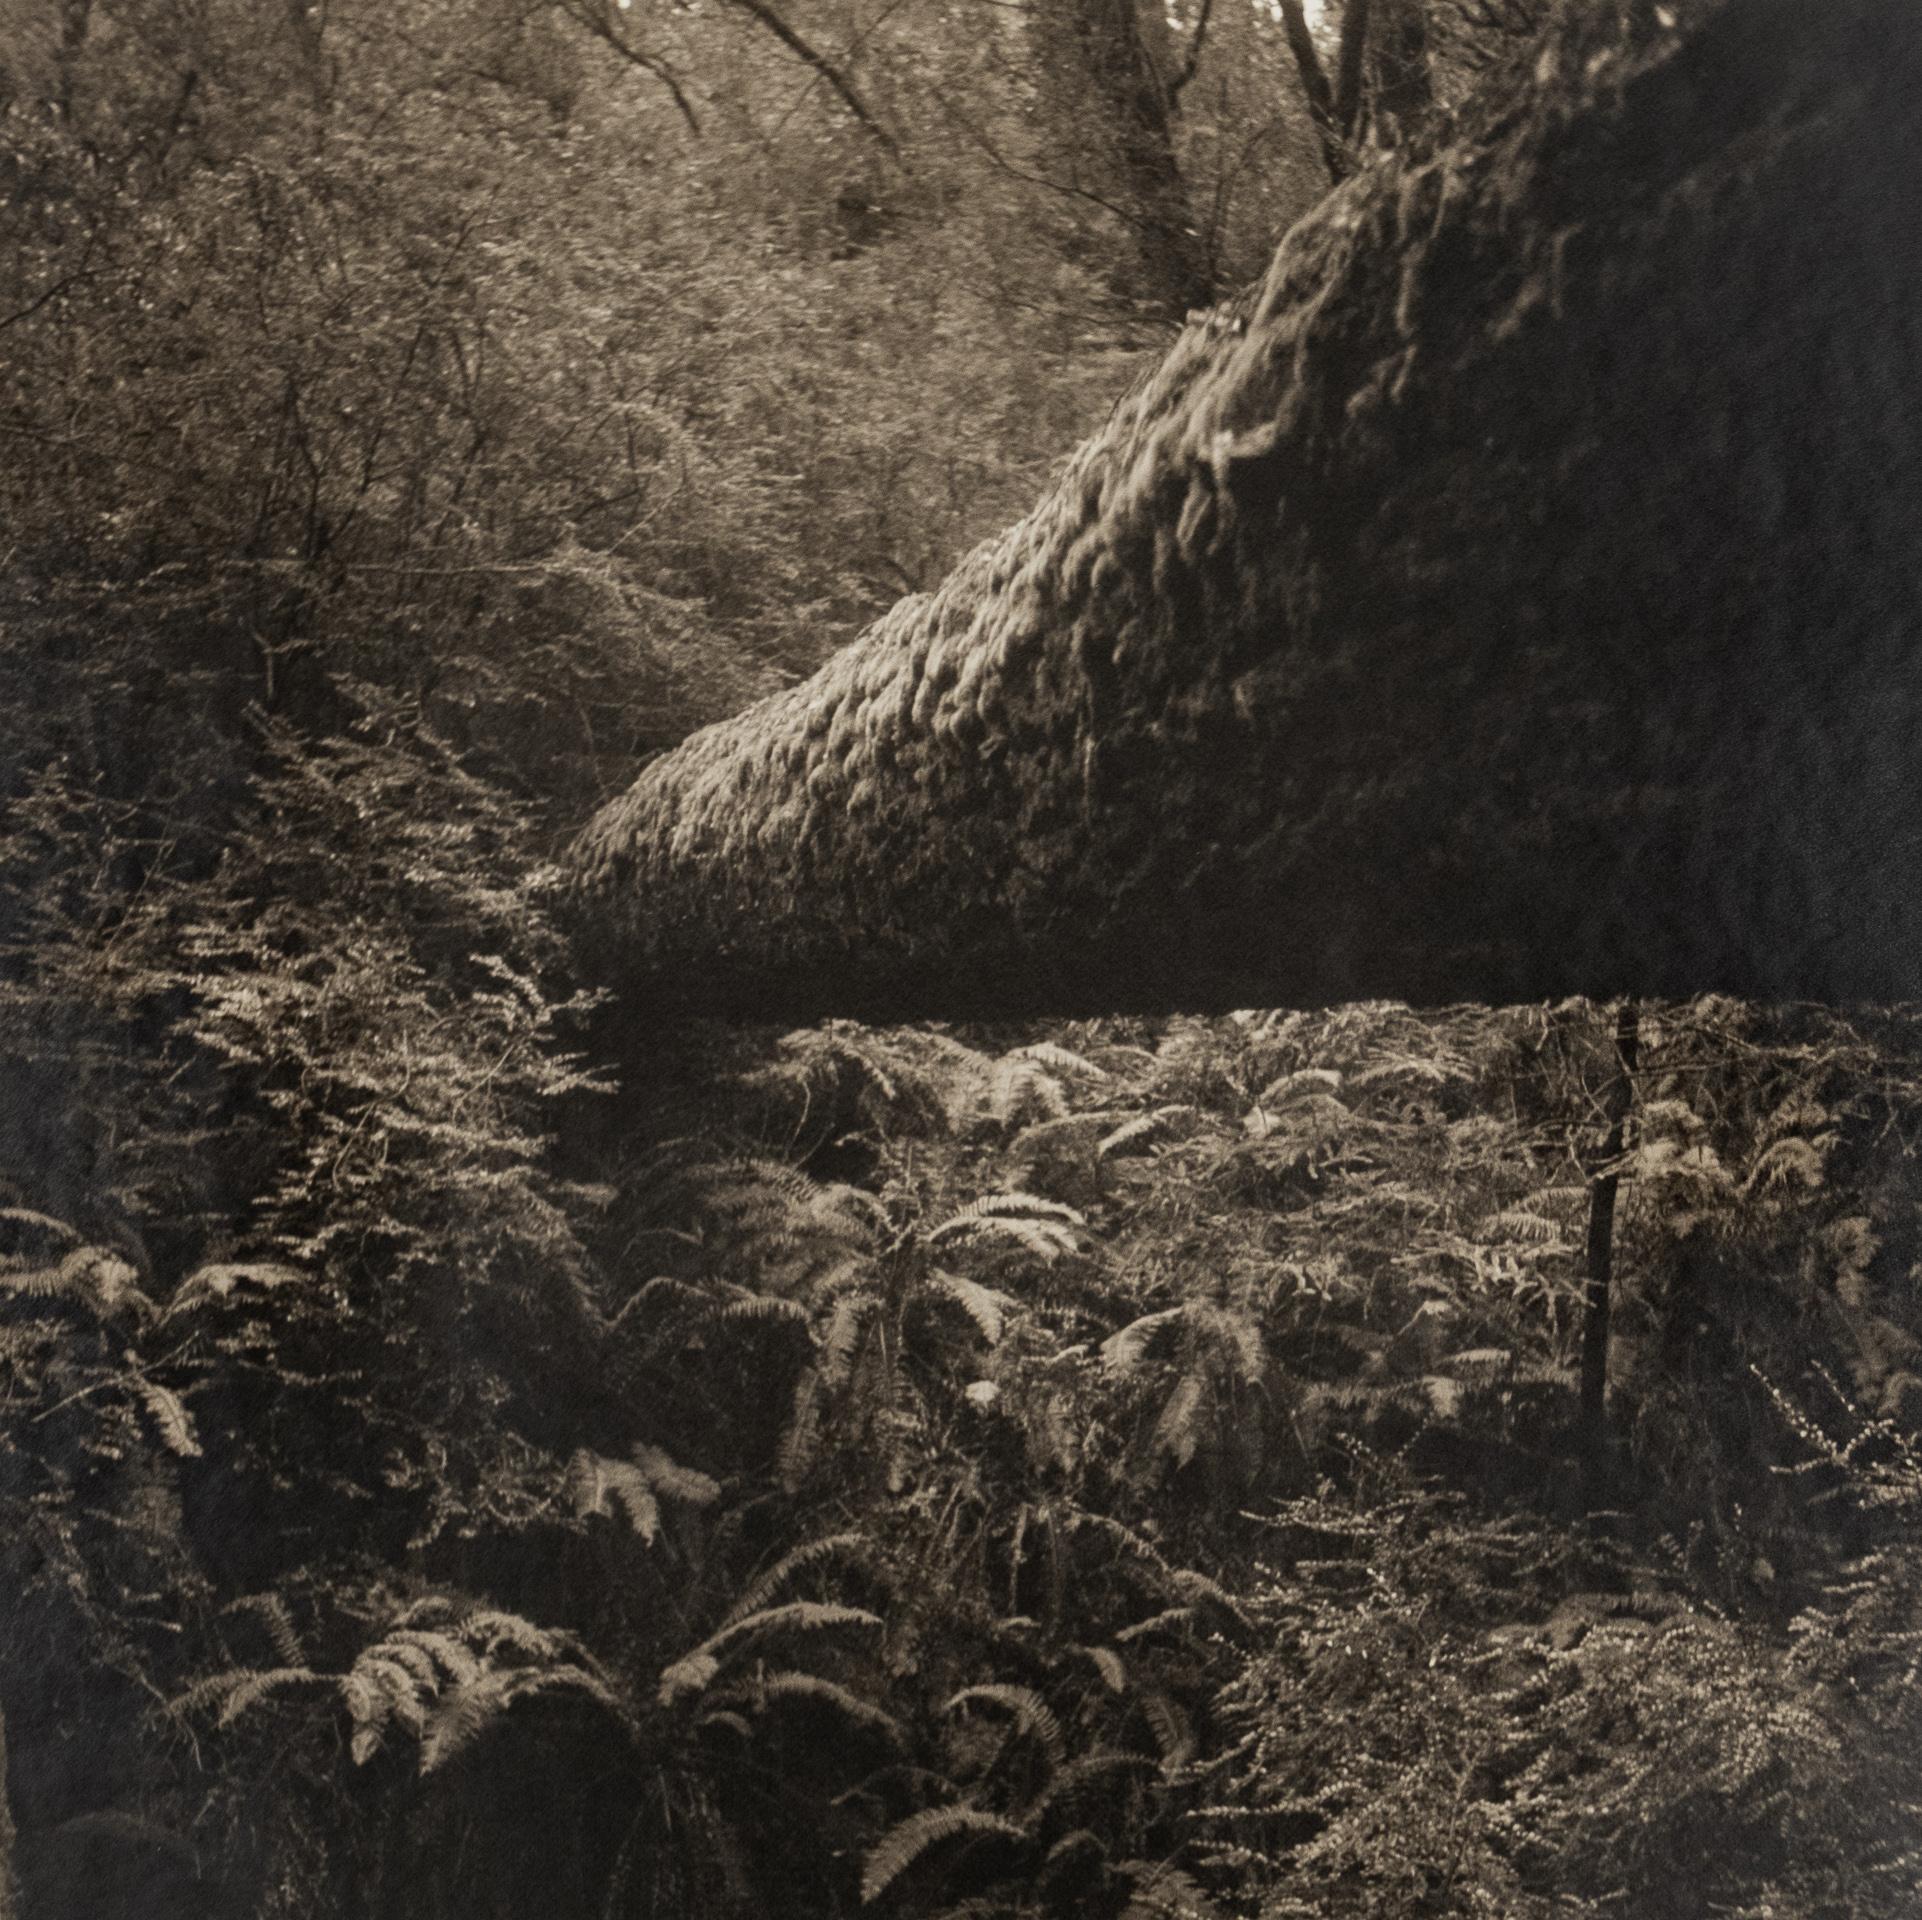 David Halliday Black and White Photograph – Gefallener Sequoia